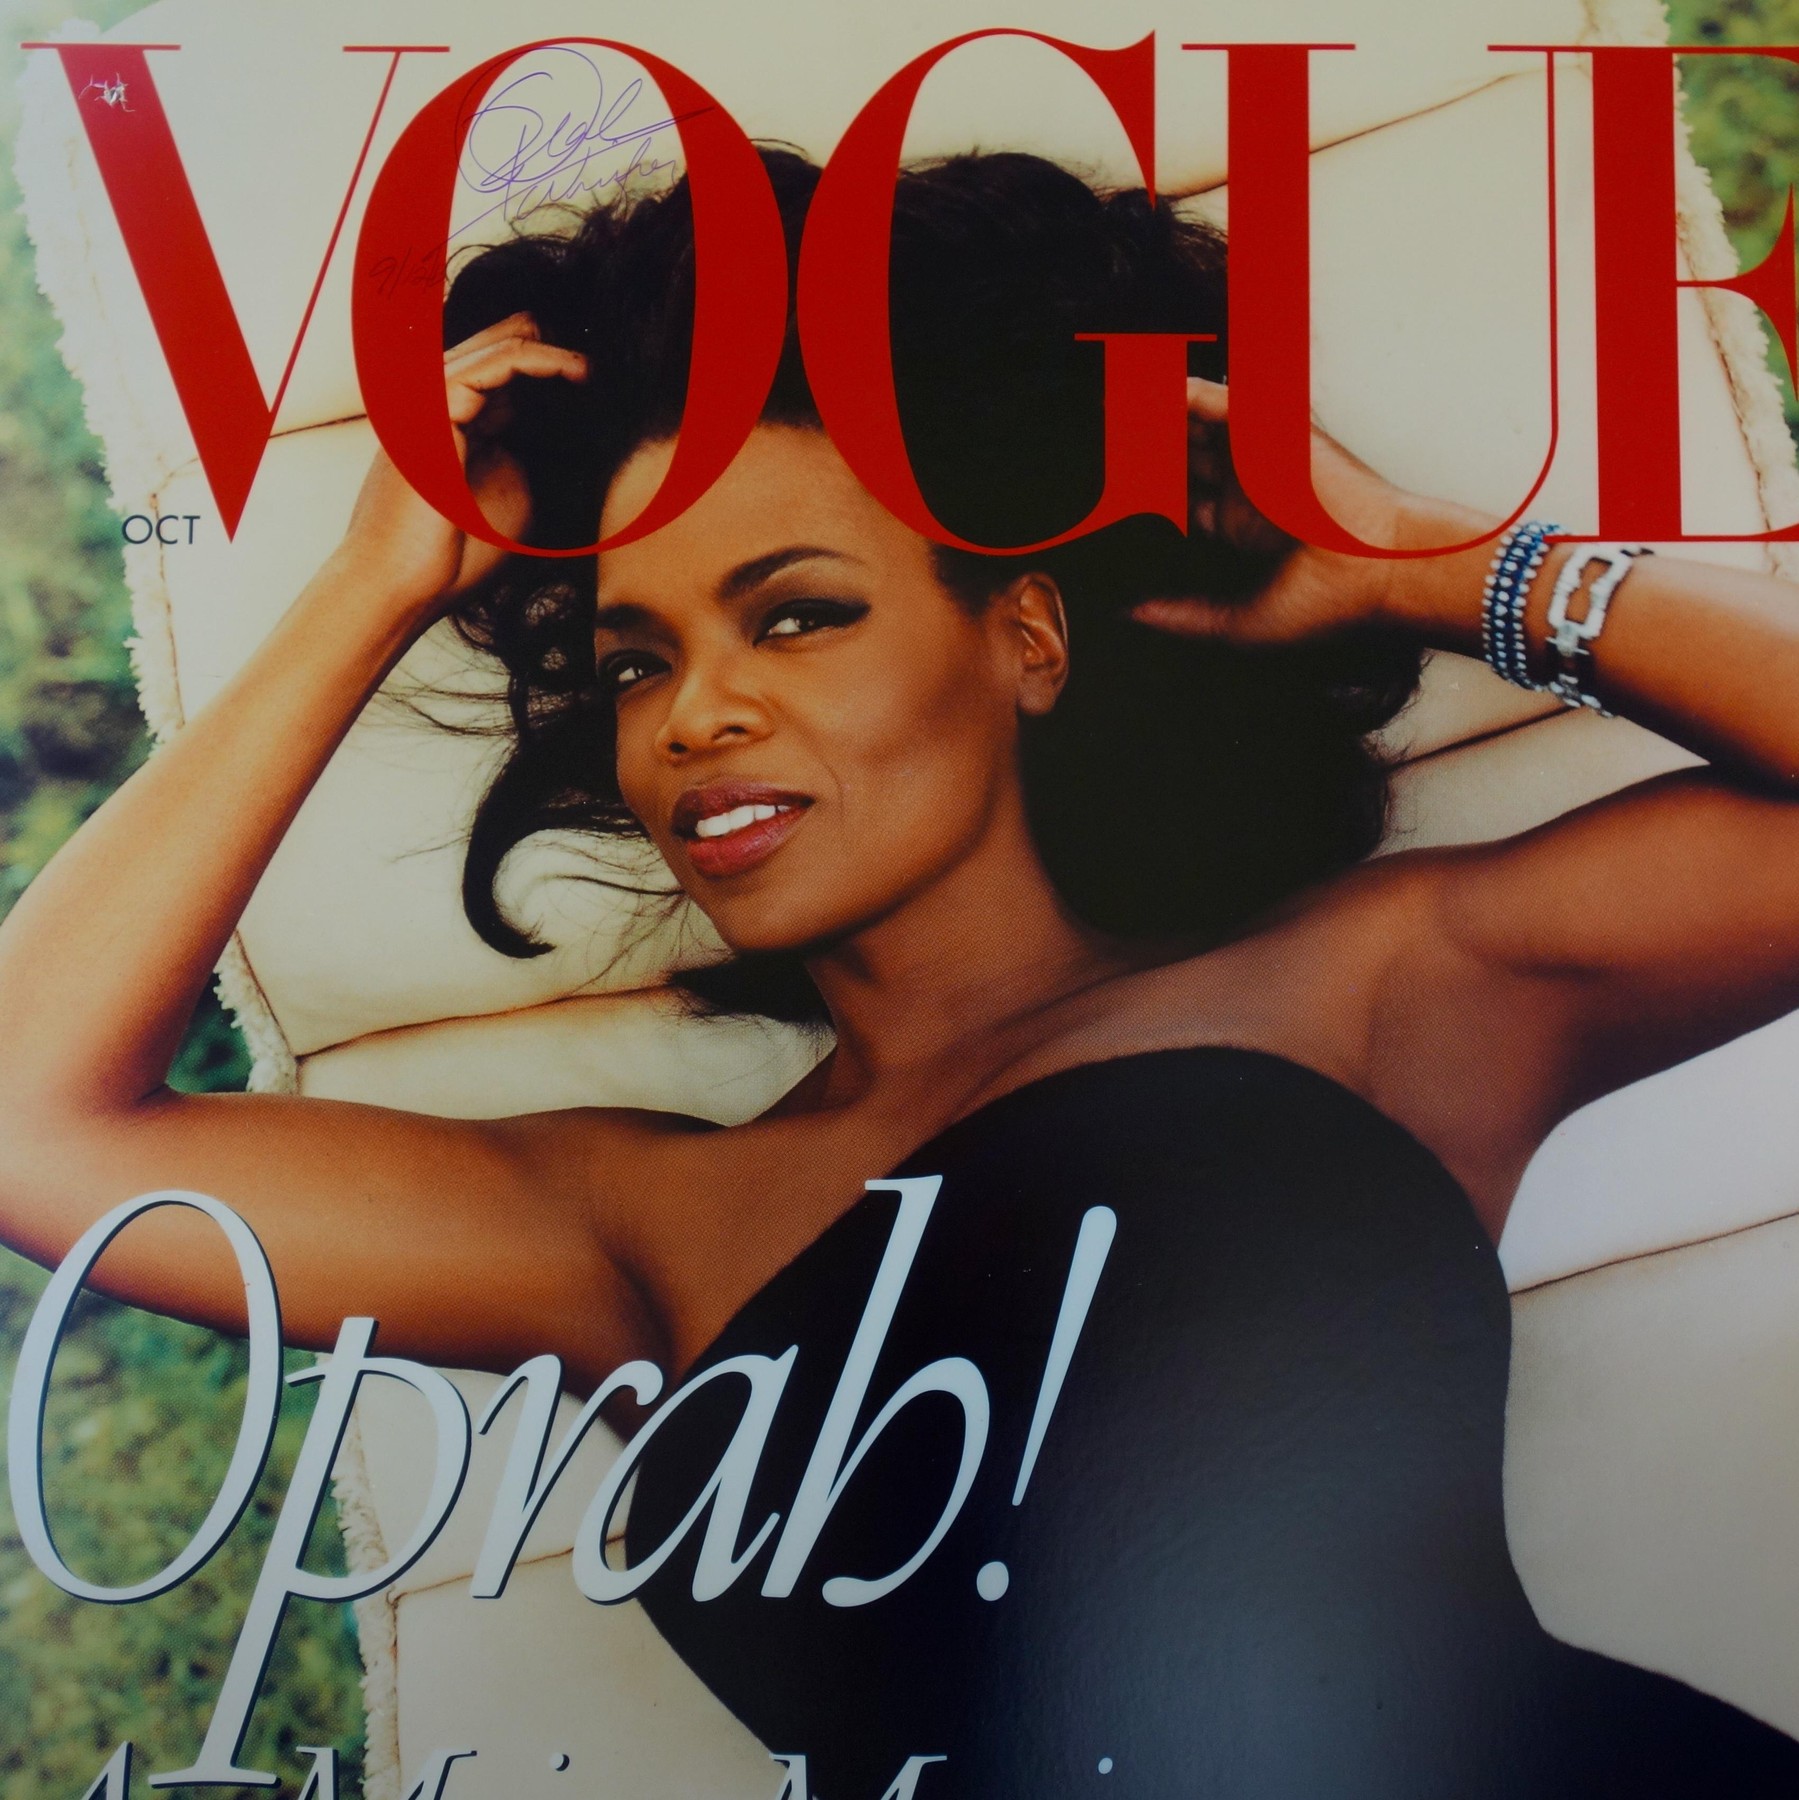 Vogue skandal